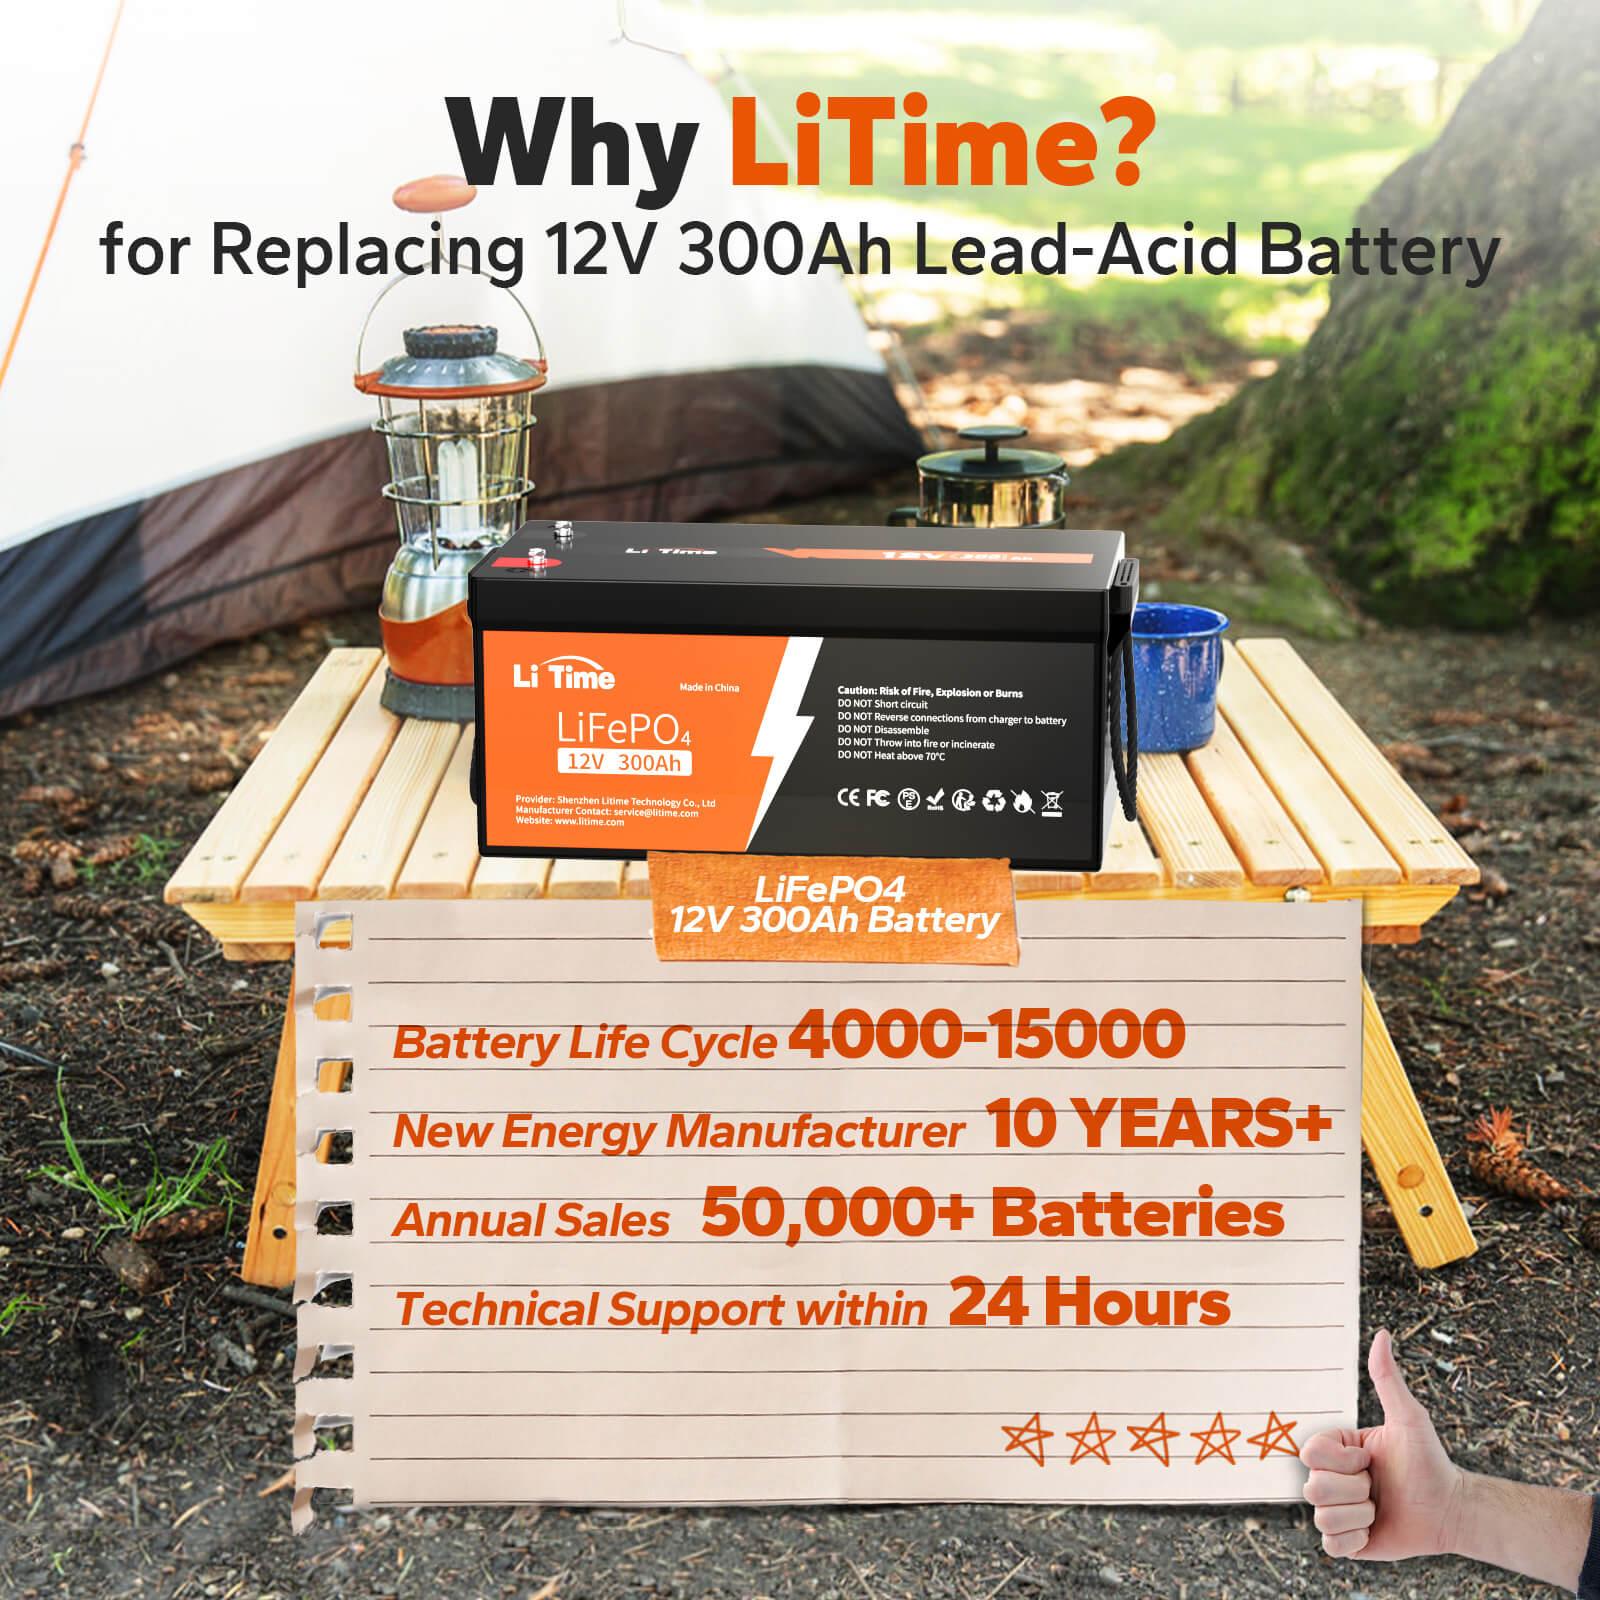 litime 12v 300ah lithium battery Advantages of lithium batteries